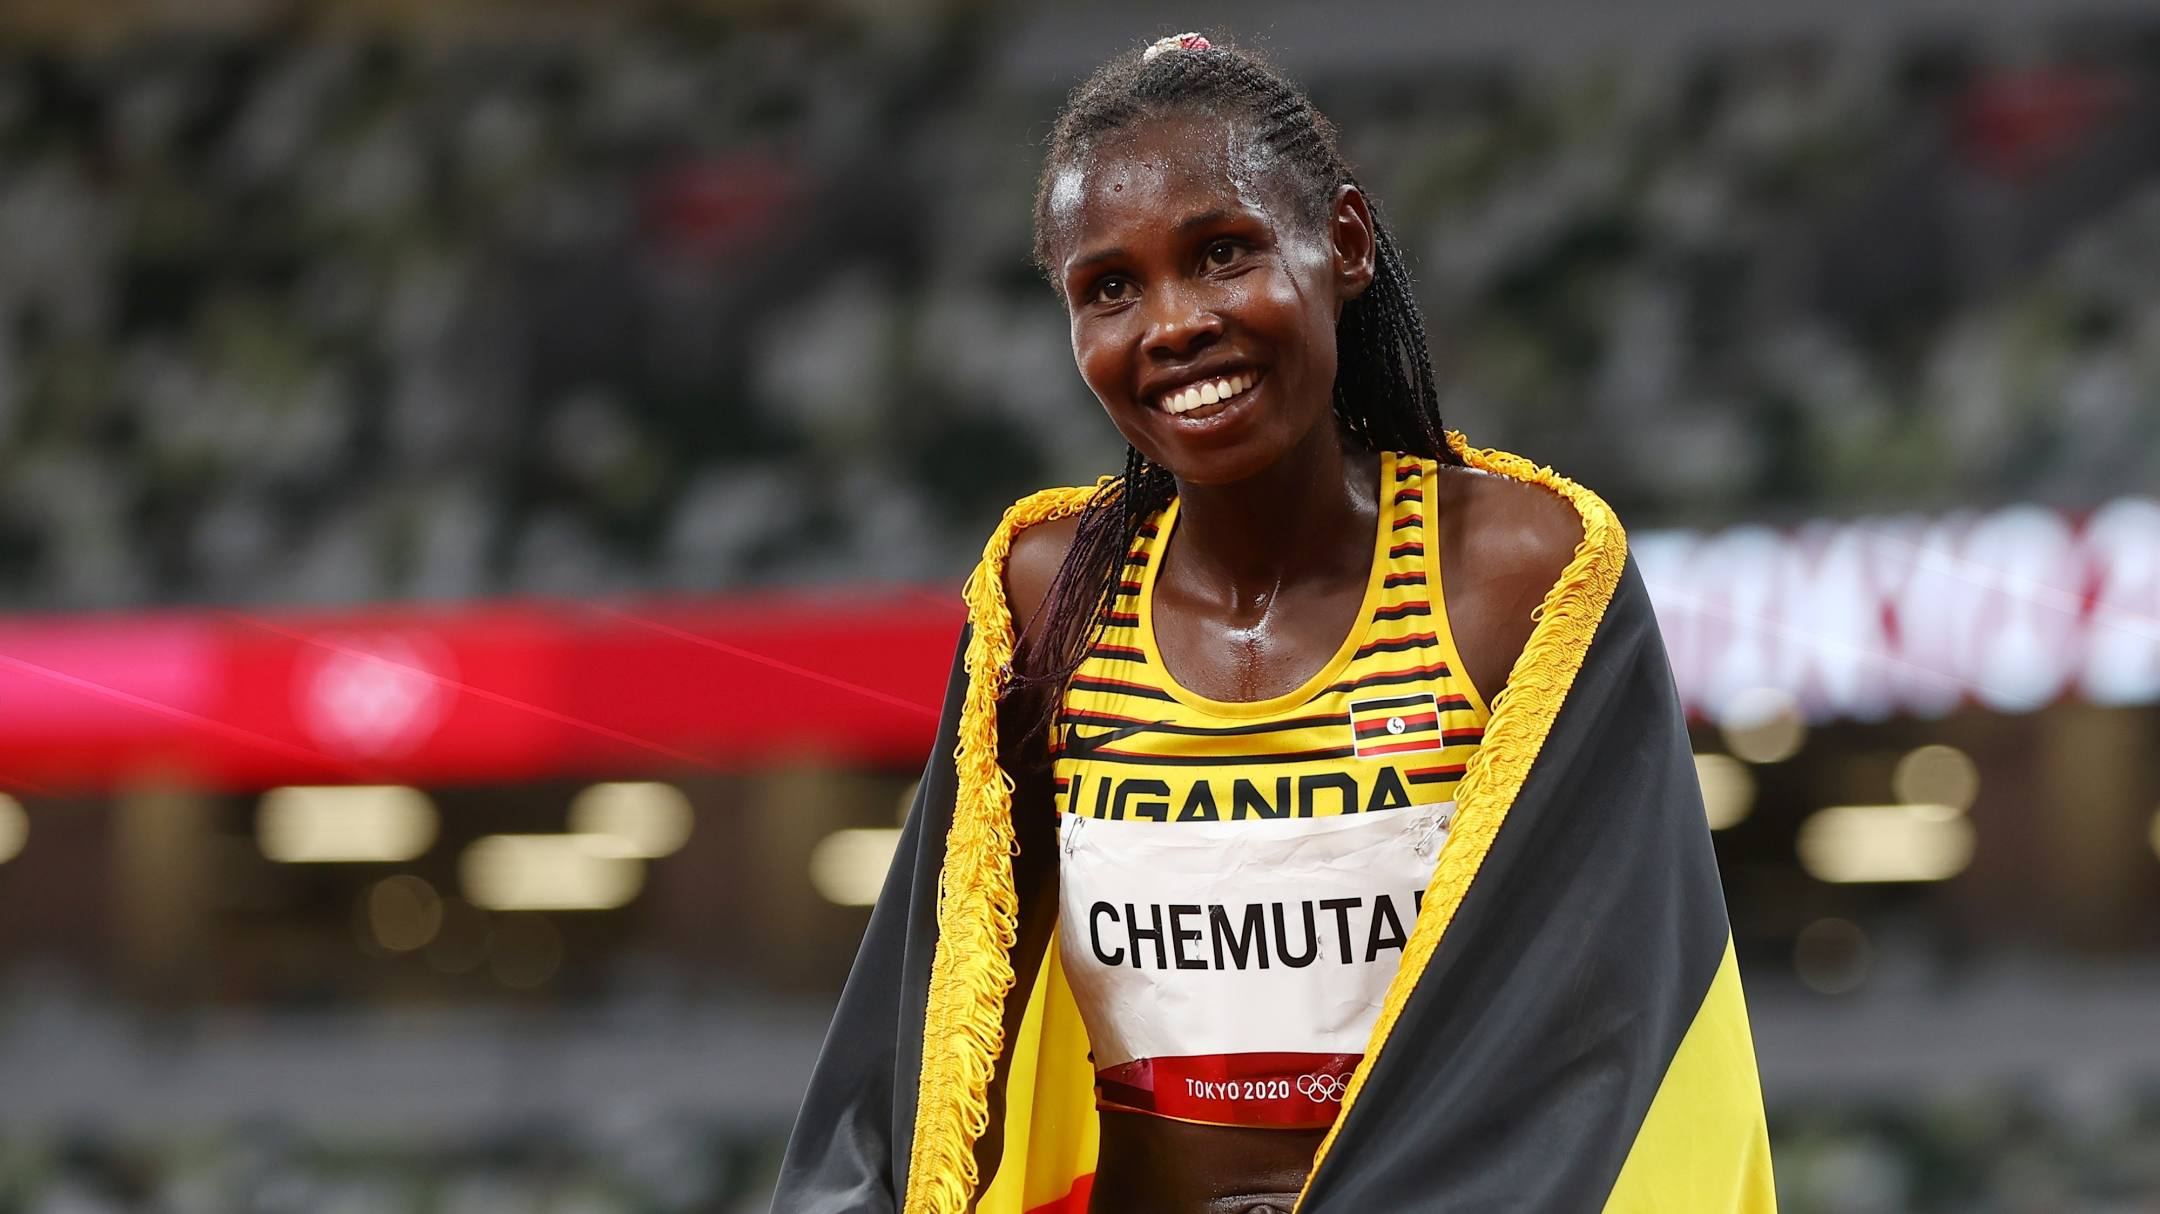 Chemutai wins first gold medal for Uganda in 2020 Olympics - Nile Post